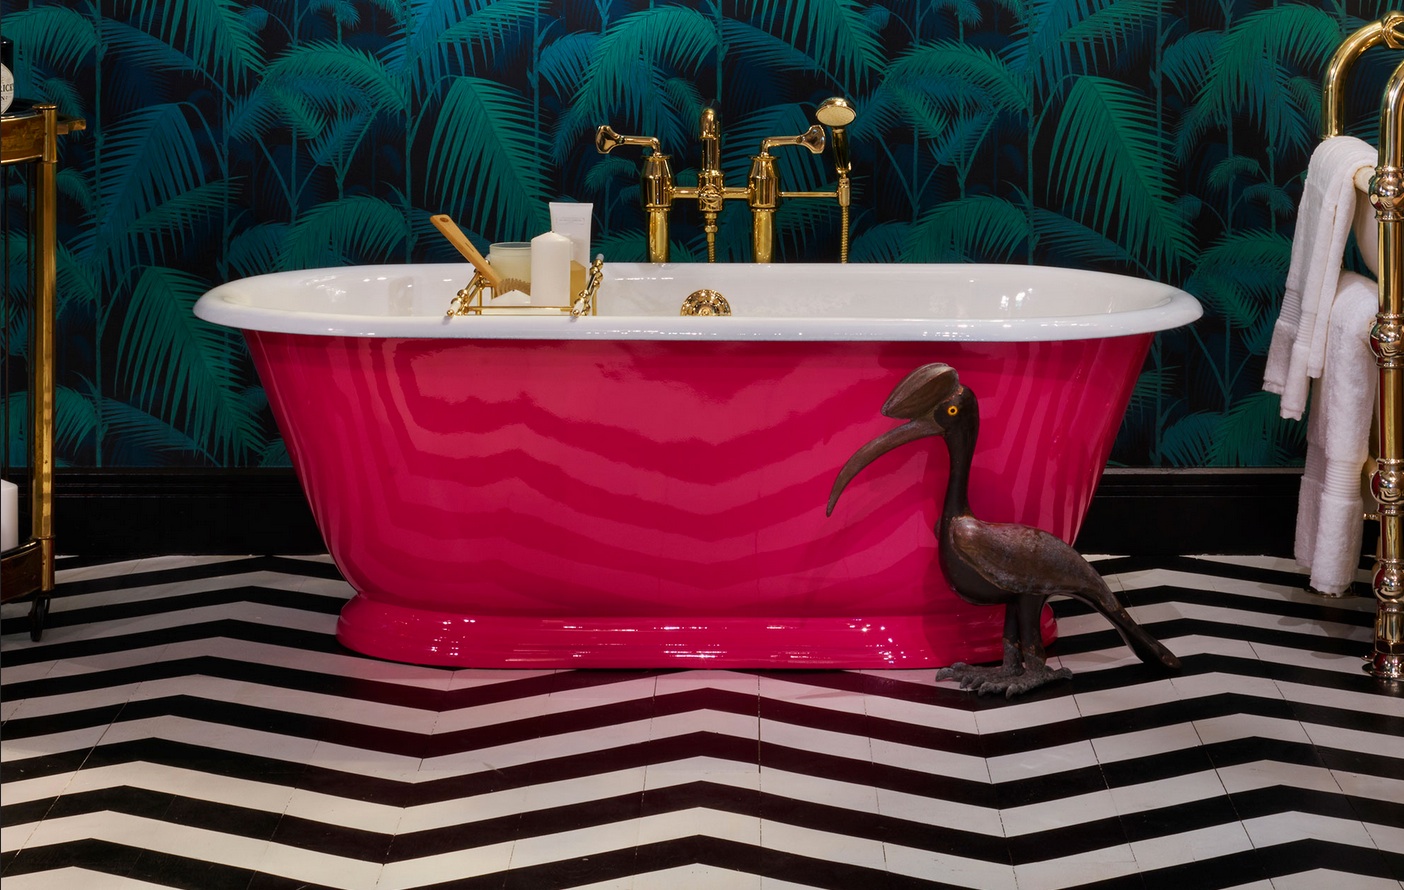 The Tweed Bath by Drummonds